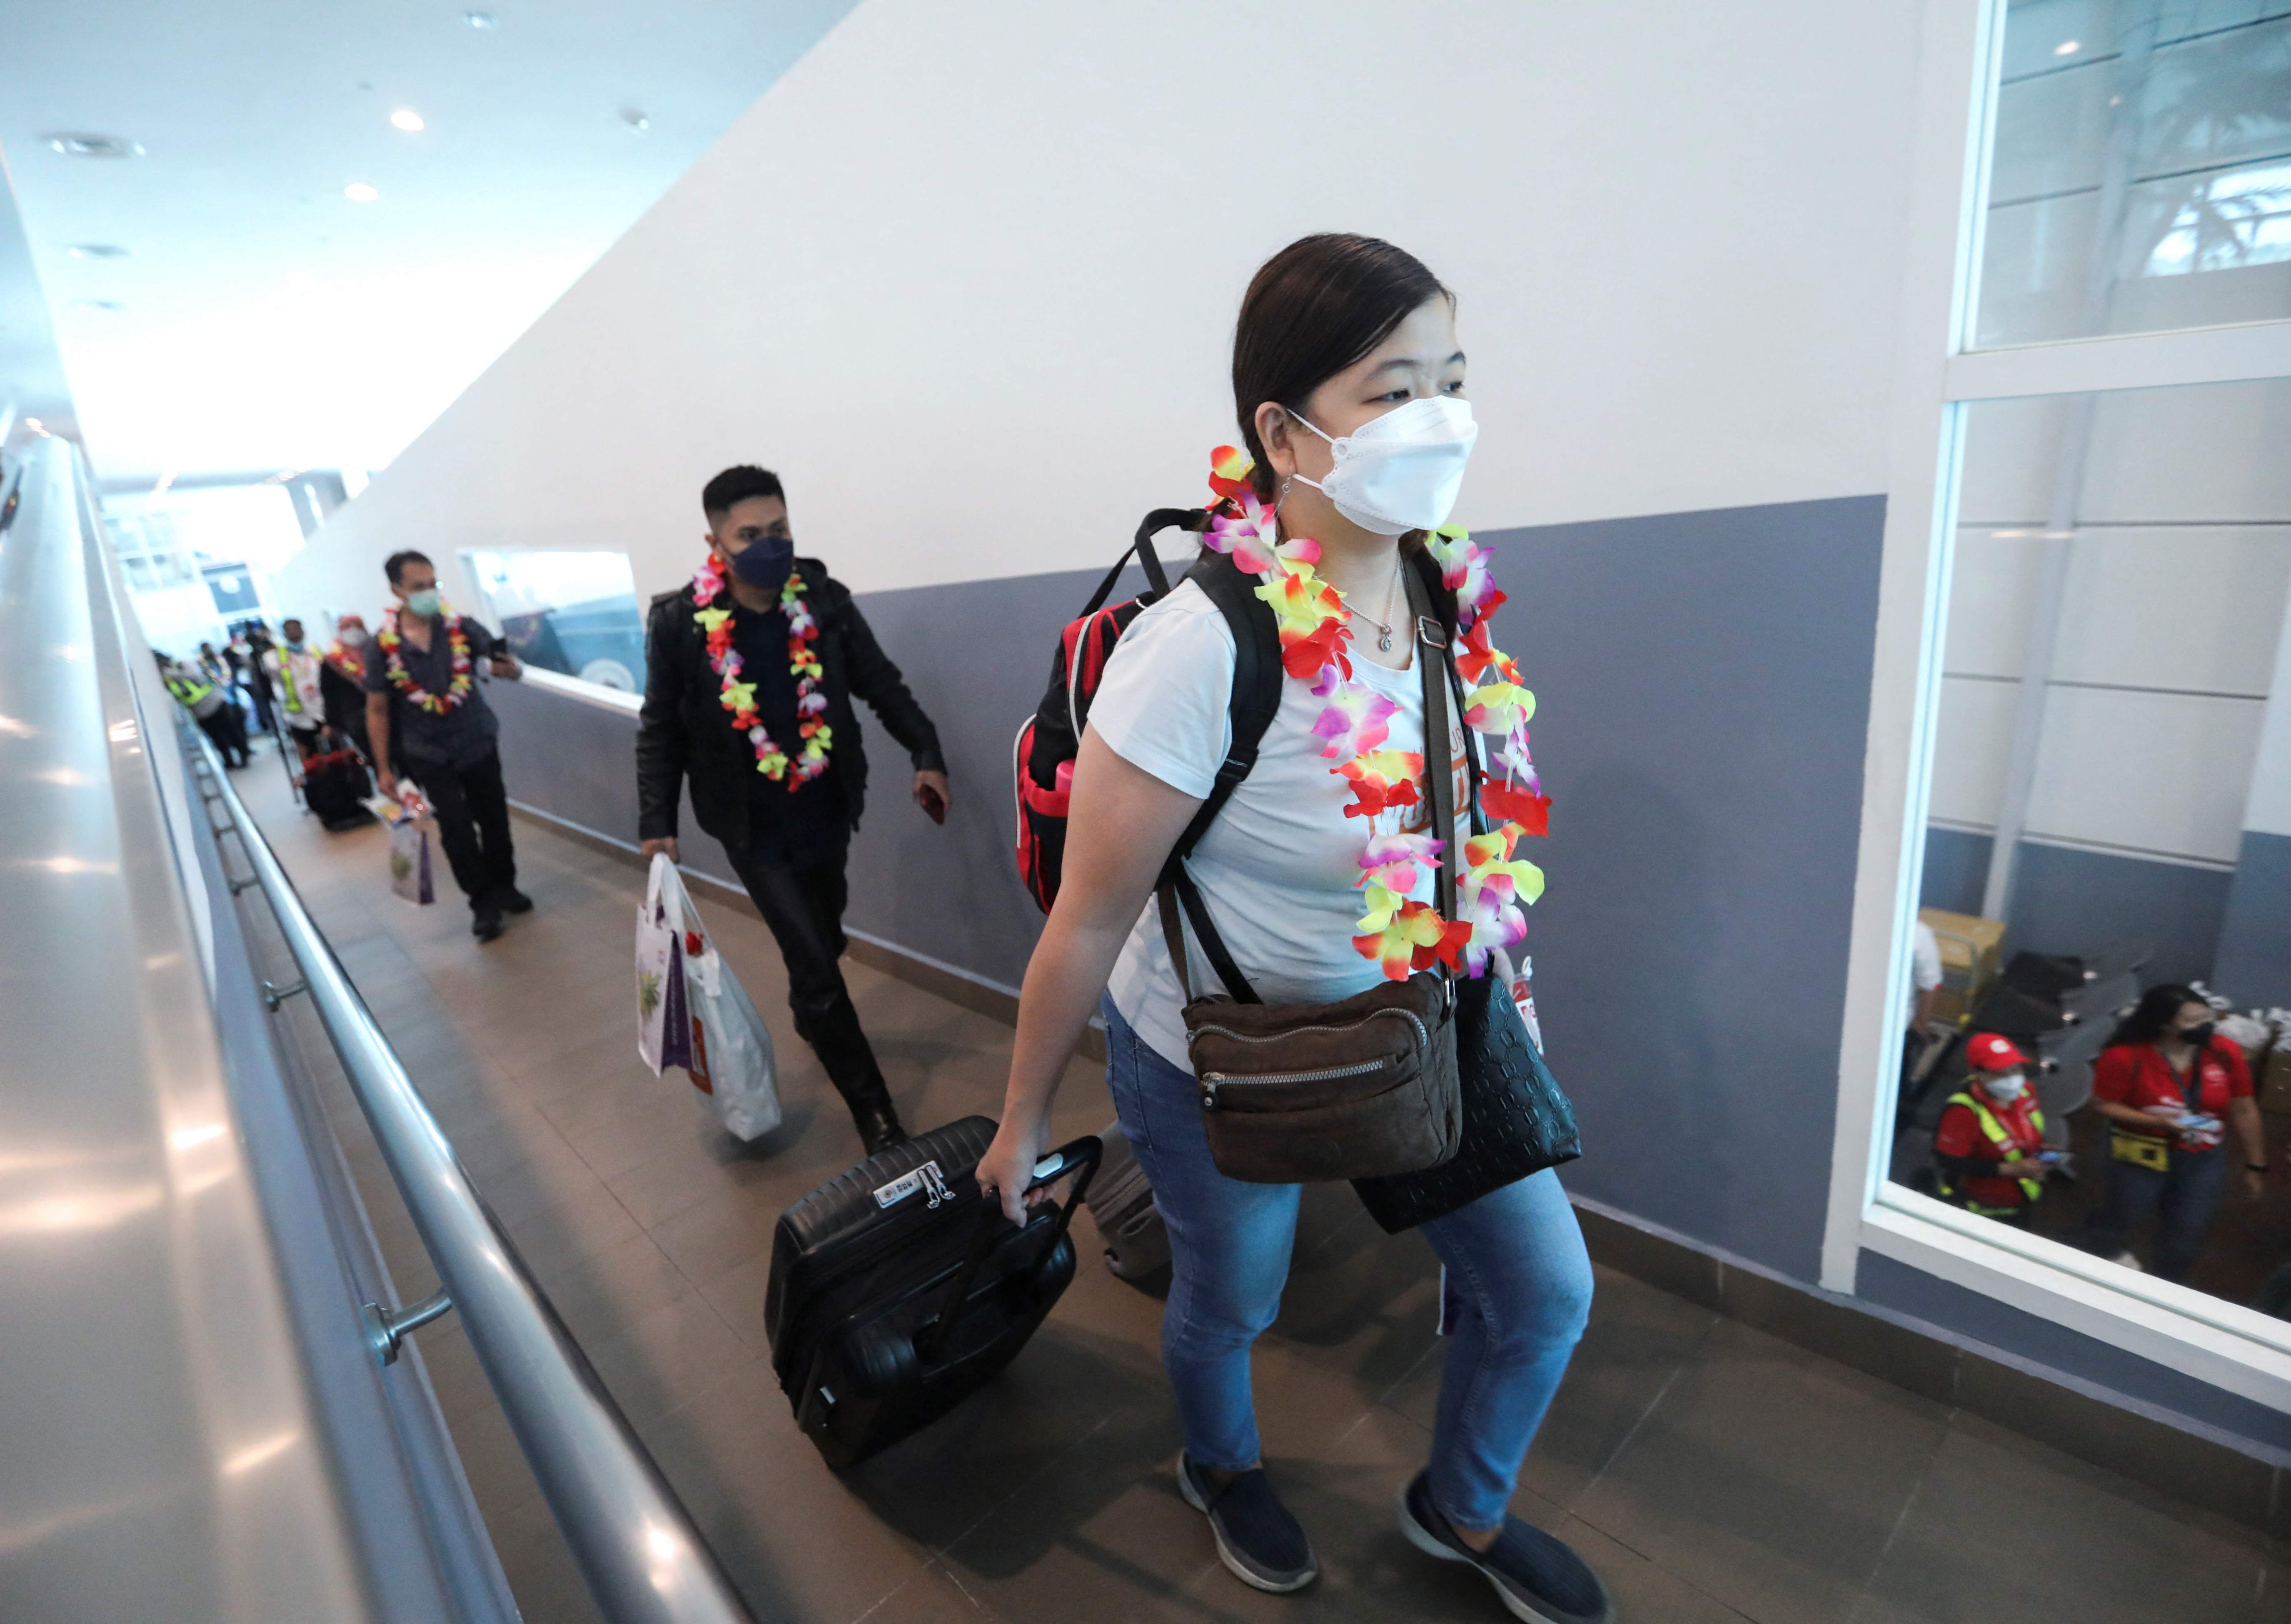 Travellers disembark from an airplane from Jakarta, Indonesia at Kuala Lumpur International Airport 2 (KLIA2) in Sepang